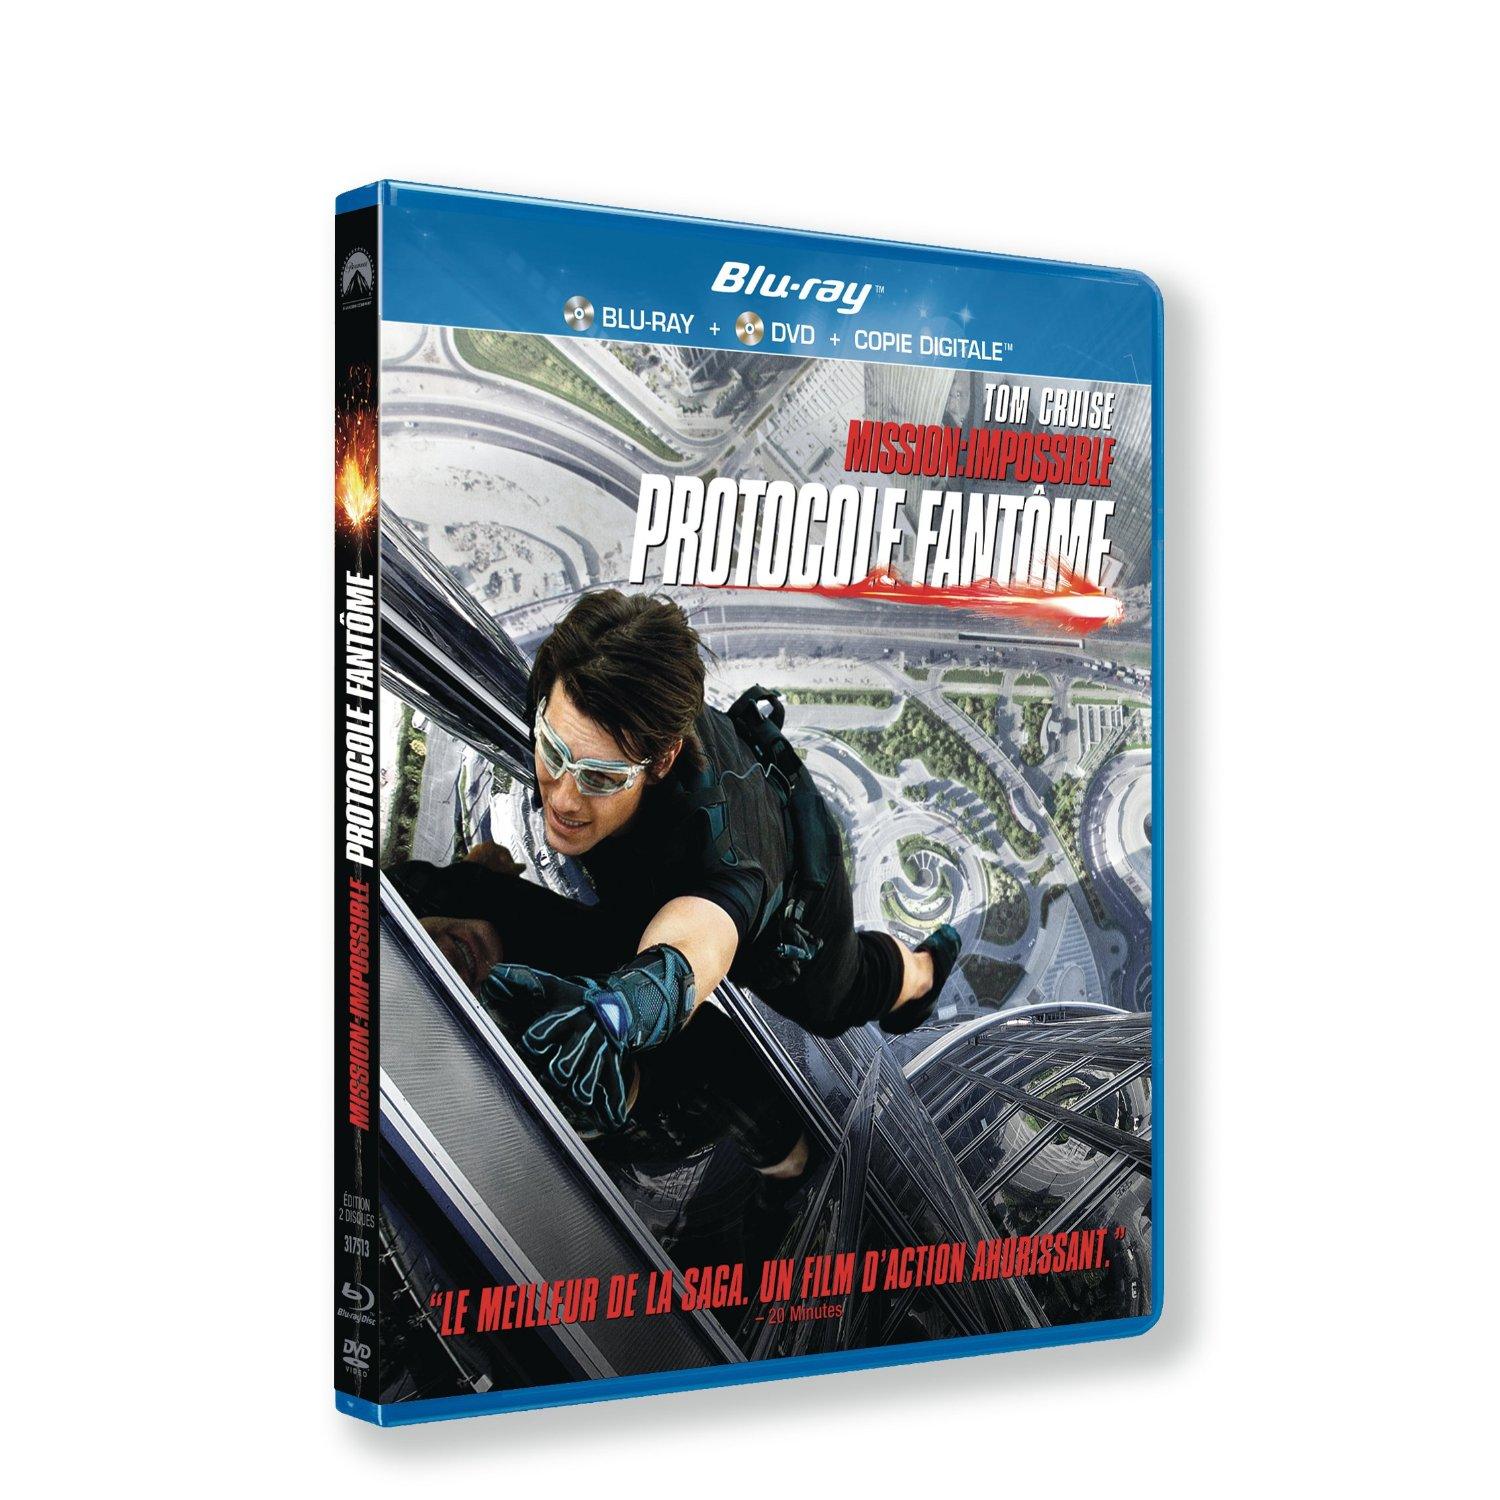 Mission Impossible 4 : Blu-ray vertigineux